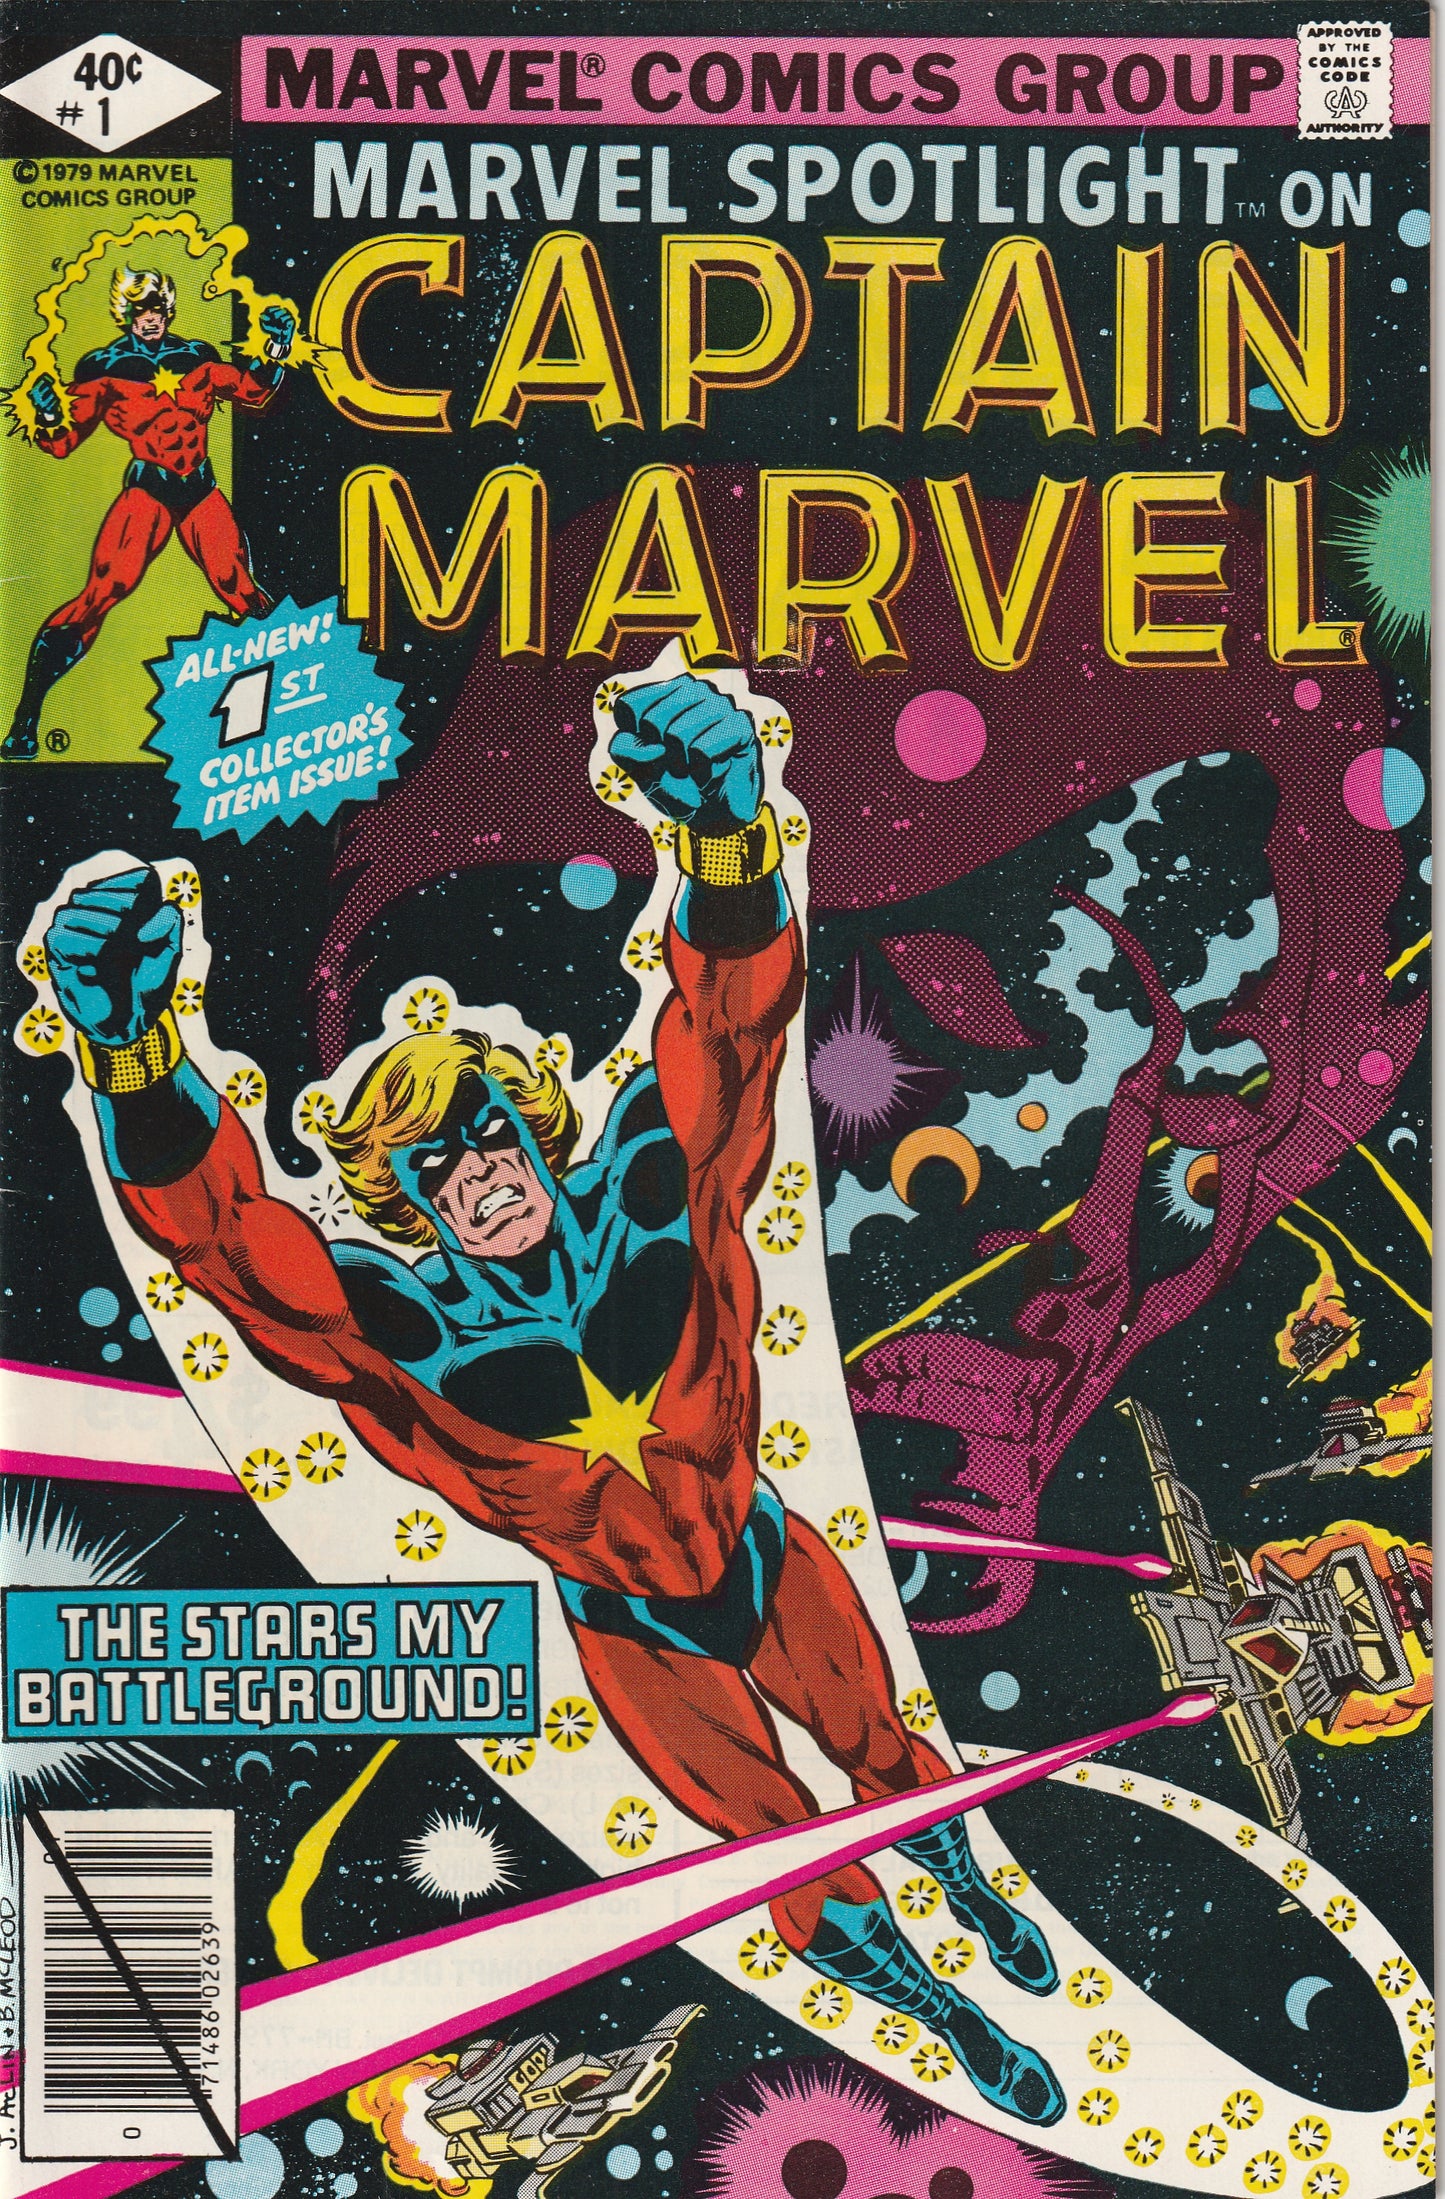 Marvel Spotlight Volume 2 #1 (1979) Captain Marvel